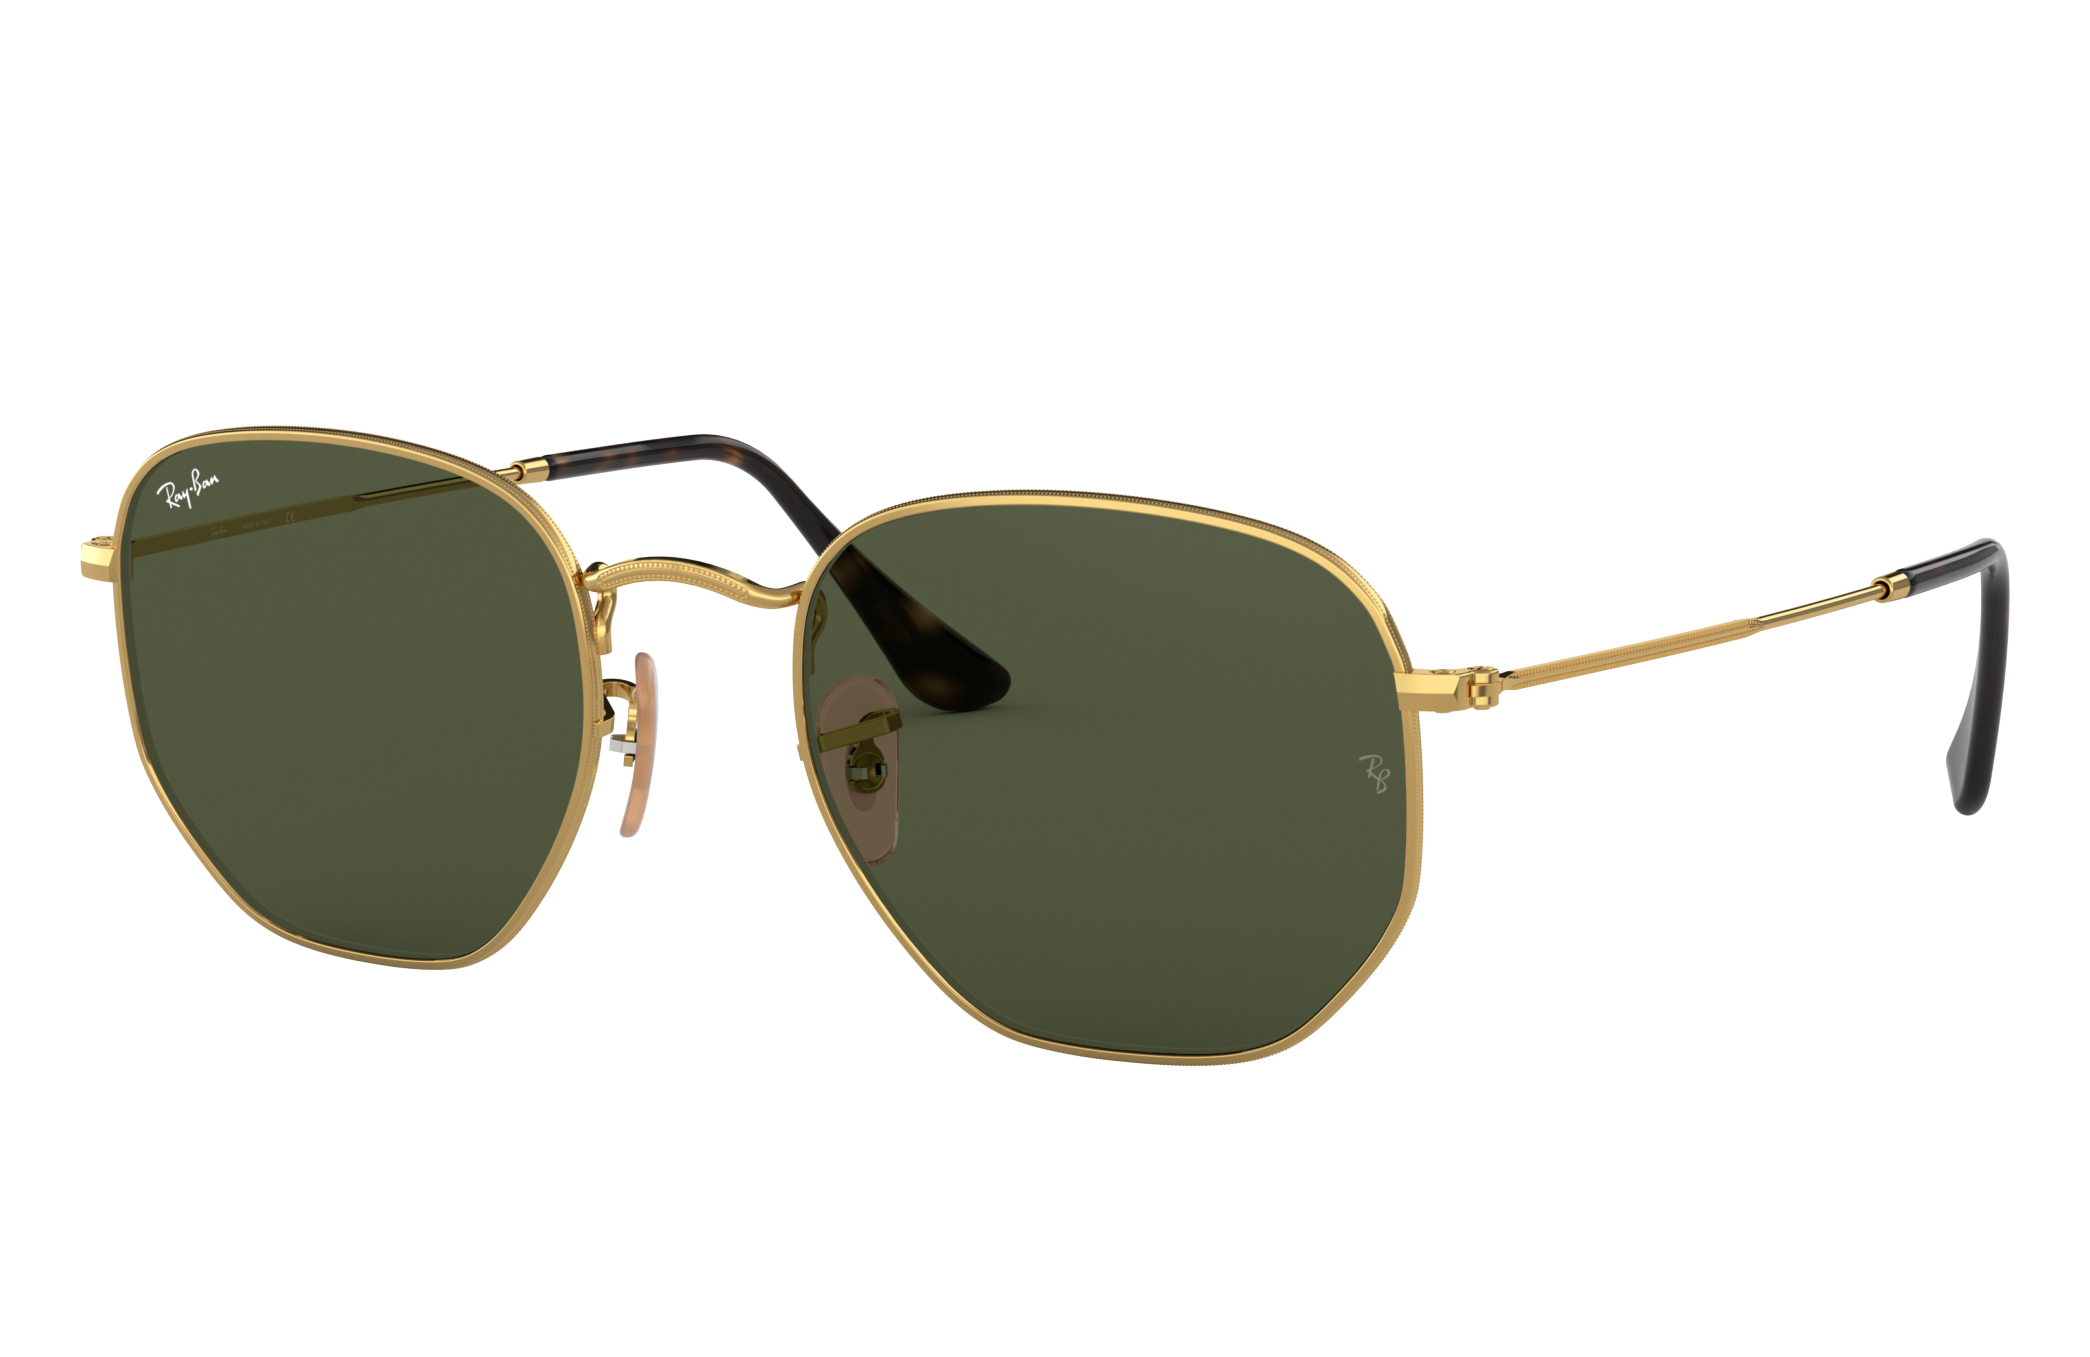 Vintage Flat Lens Hexagonal Sunglasses Rb 3548-N 001 Accessories Sunglasses & Eyewear Sunglasses Gold frame 